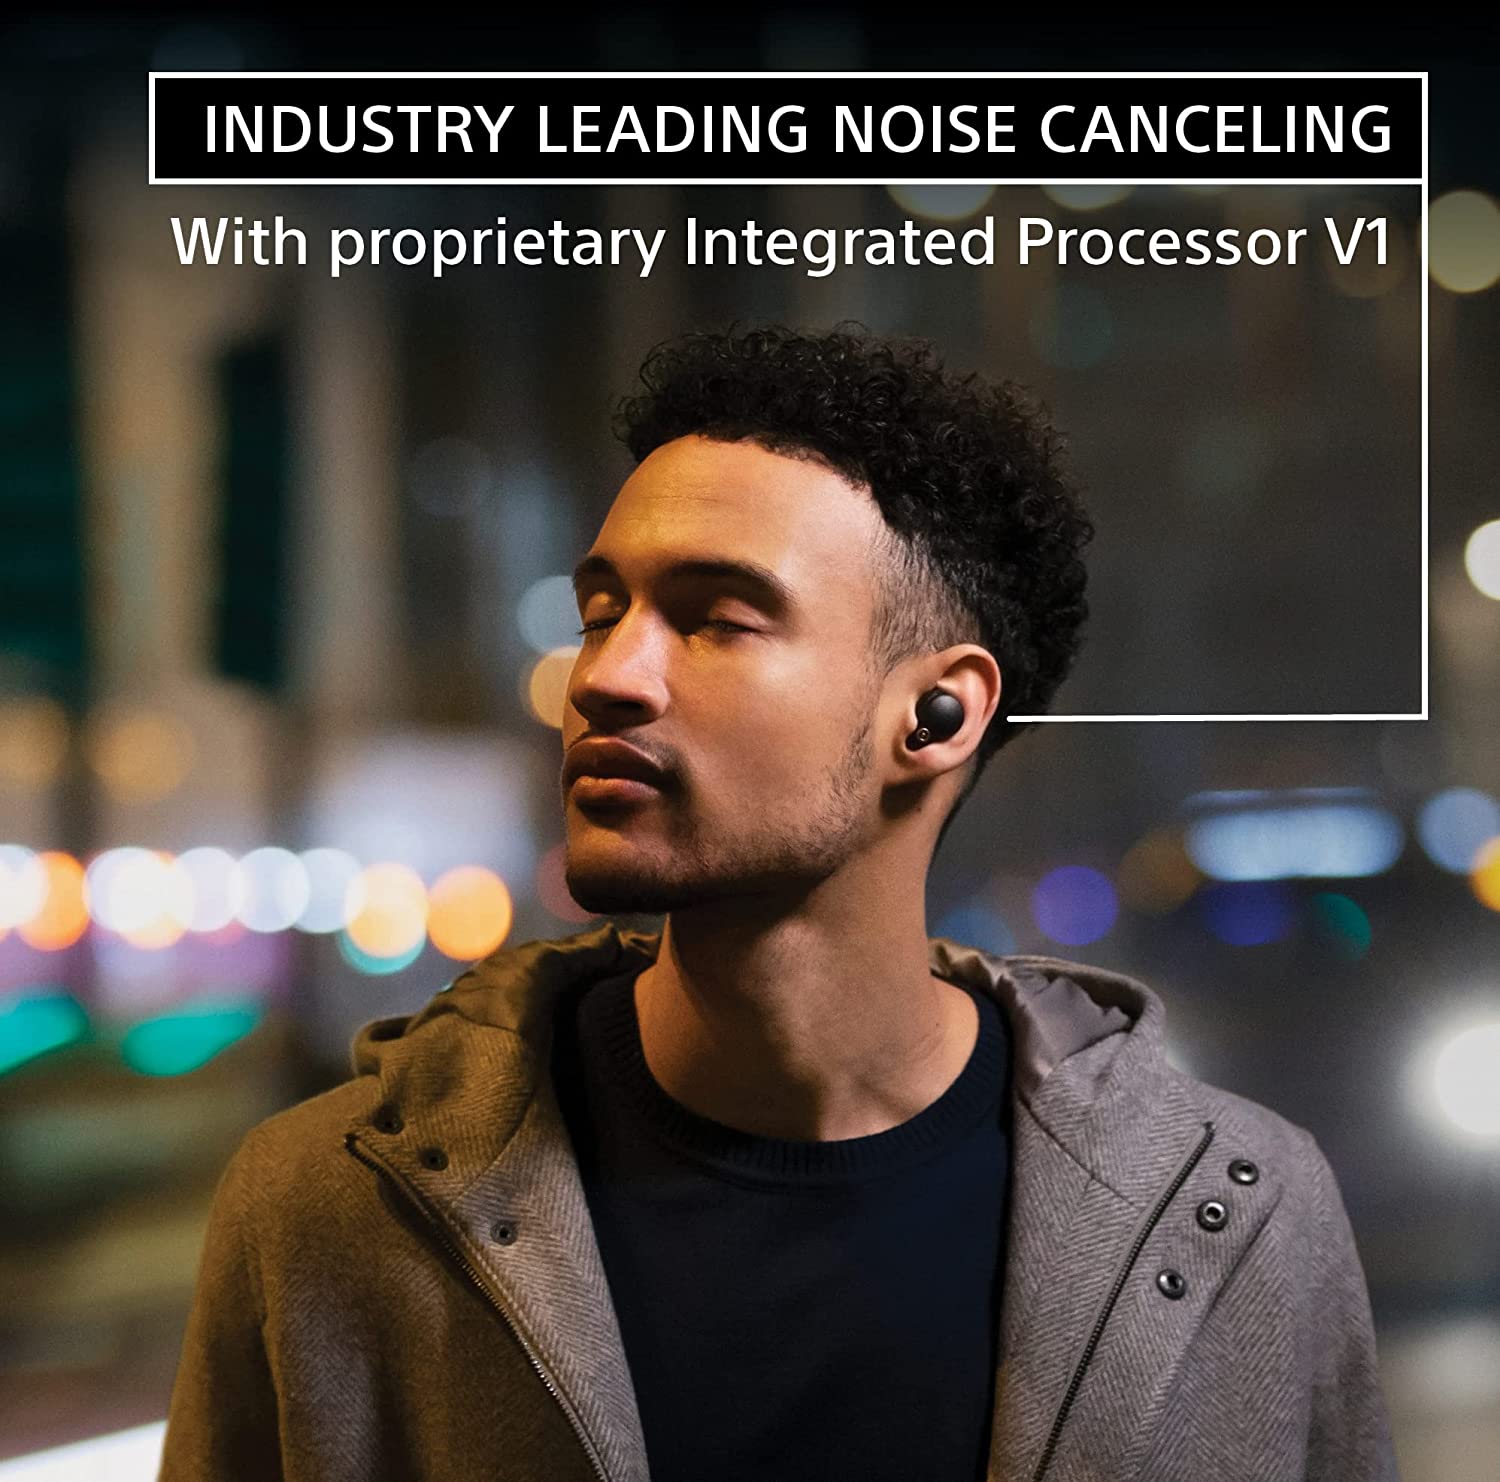 Buy Online Sony WF-1000XM4 Wireless Noise Cancelling Headphones in